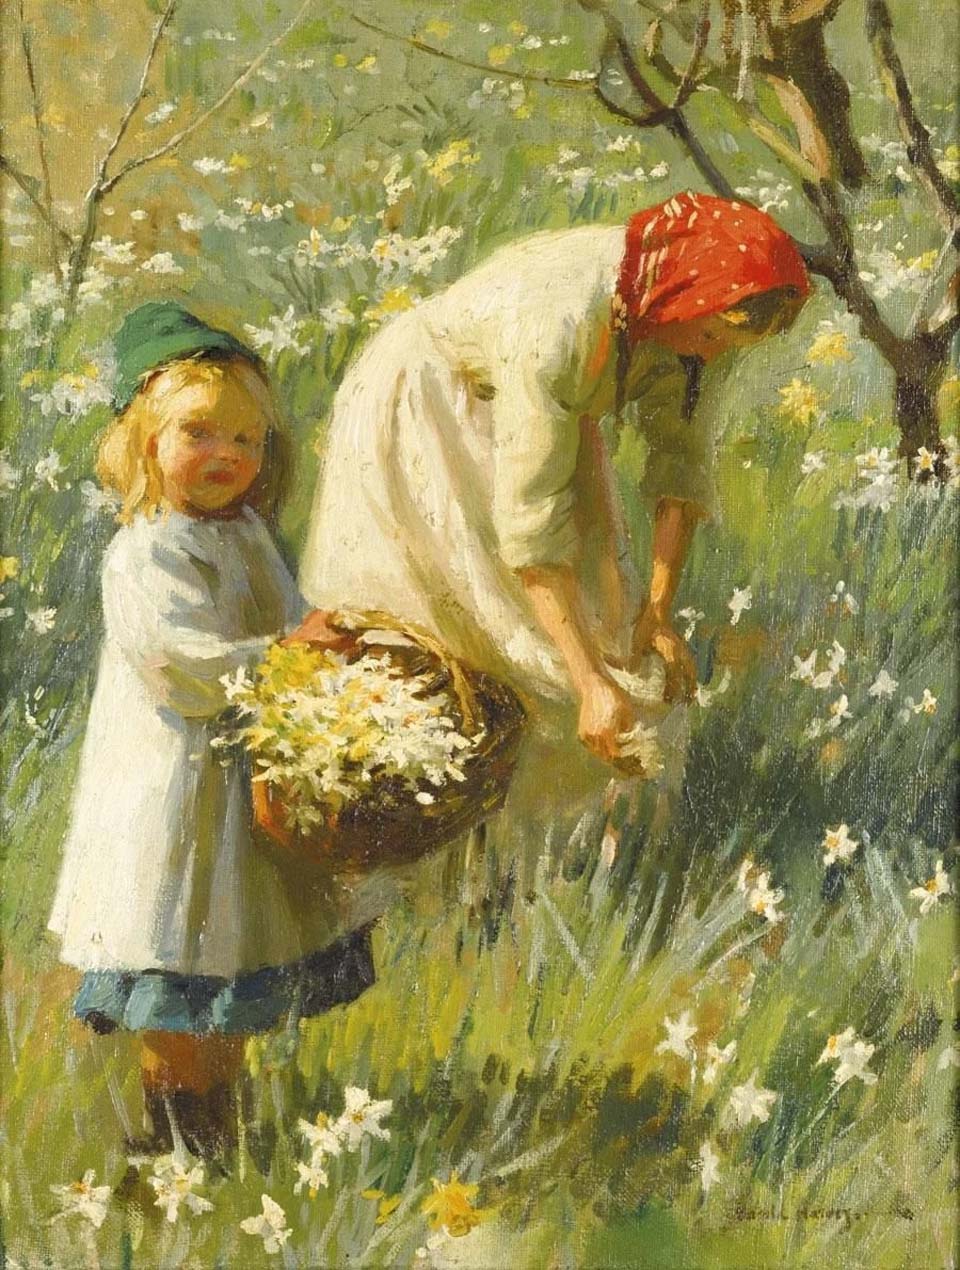 Picking daffodils